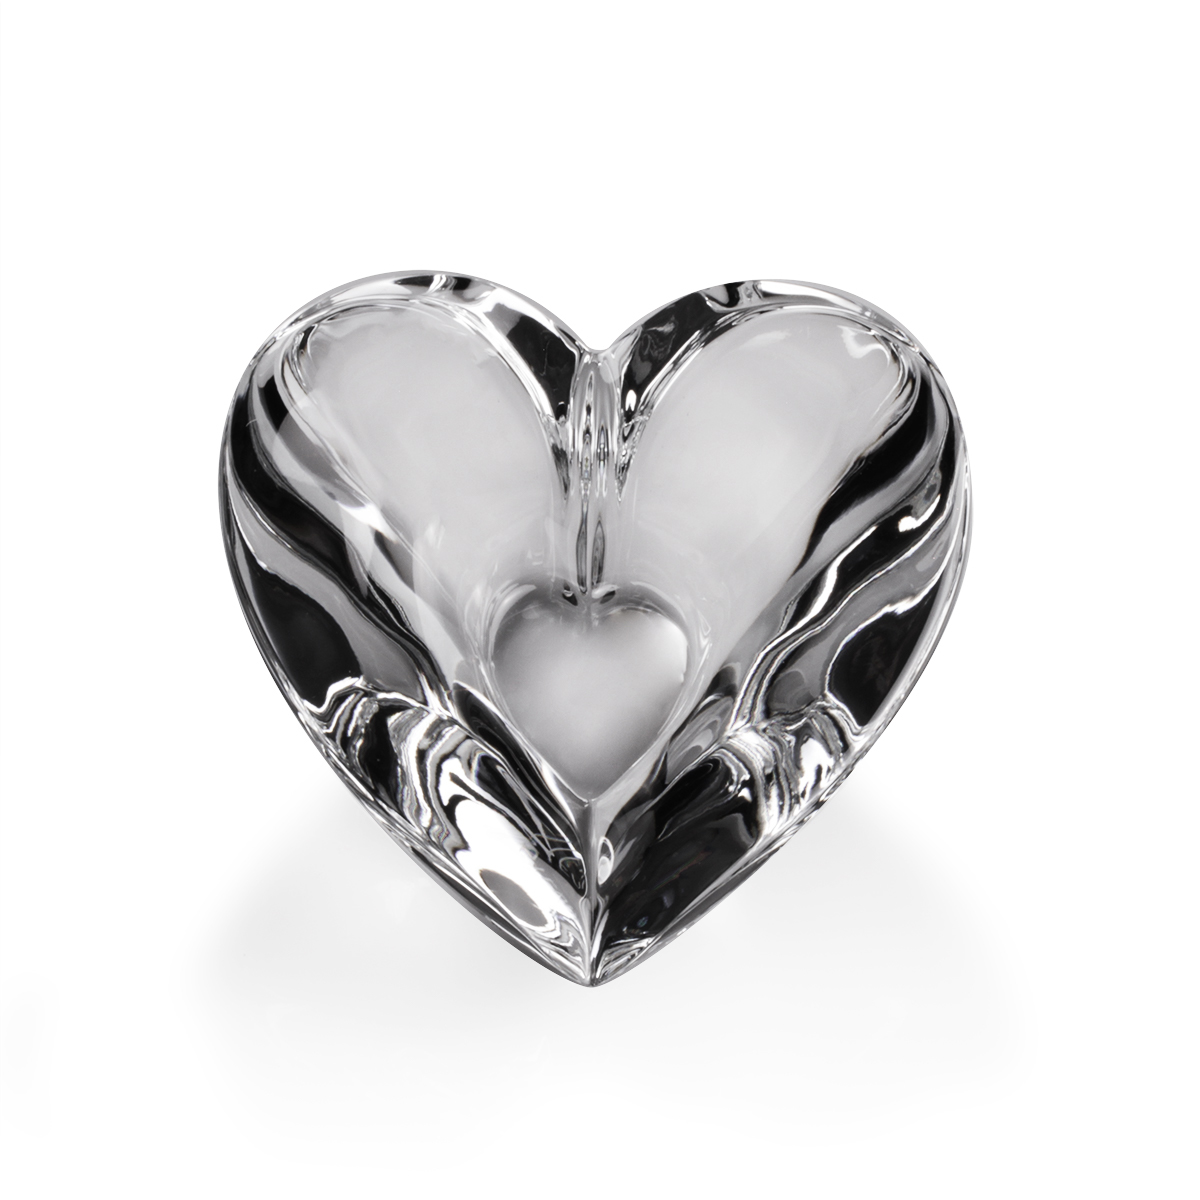 Steuben Keepsake Heart Paperweight | Crystal Classics